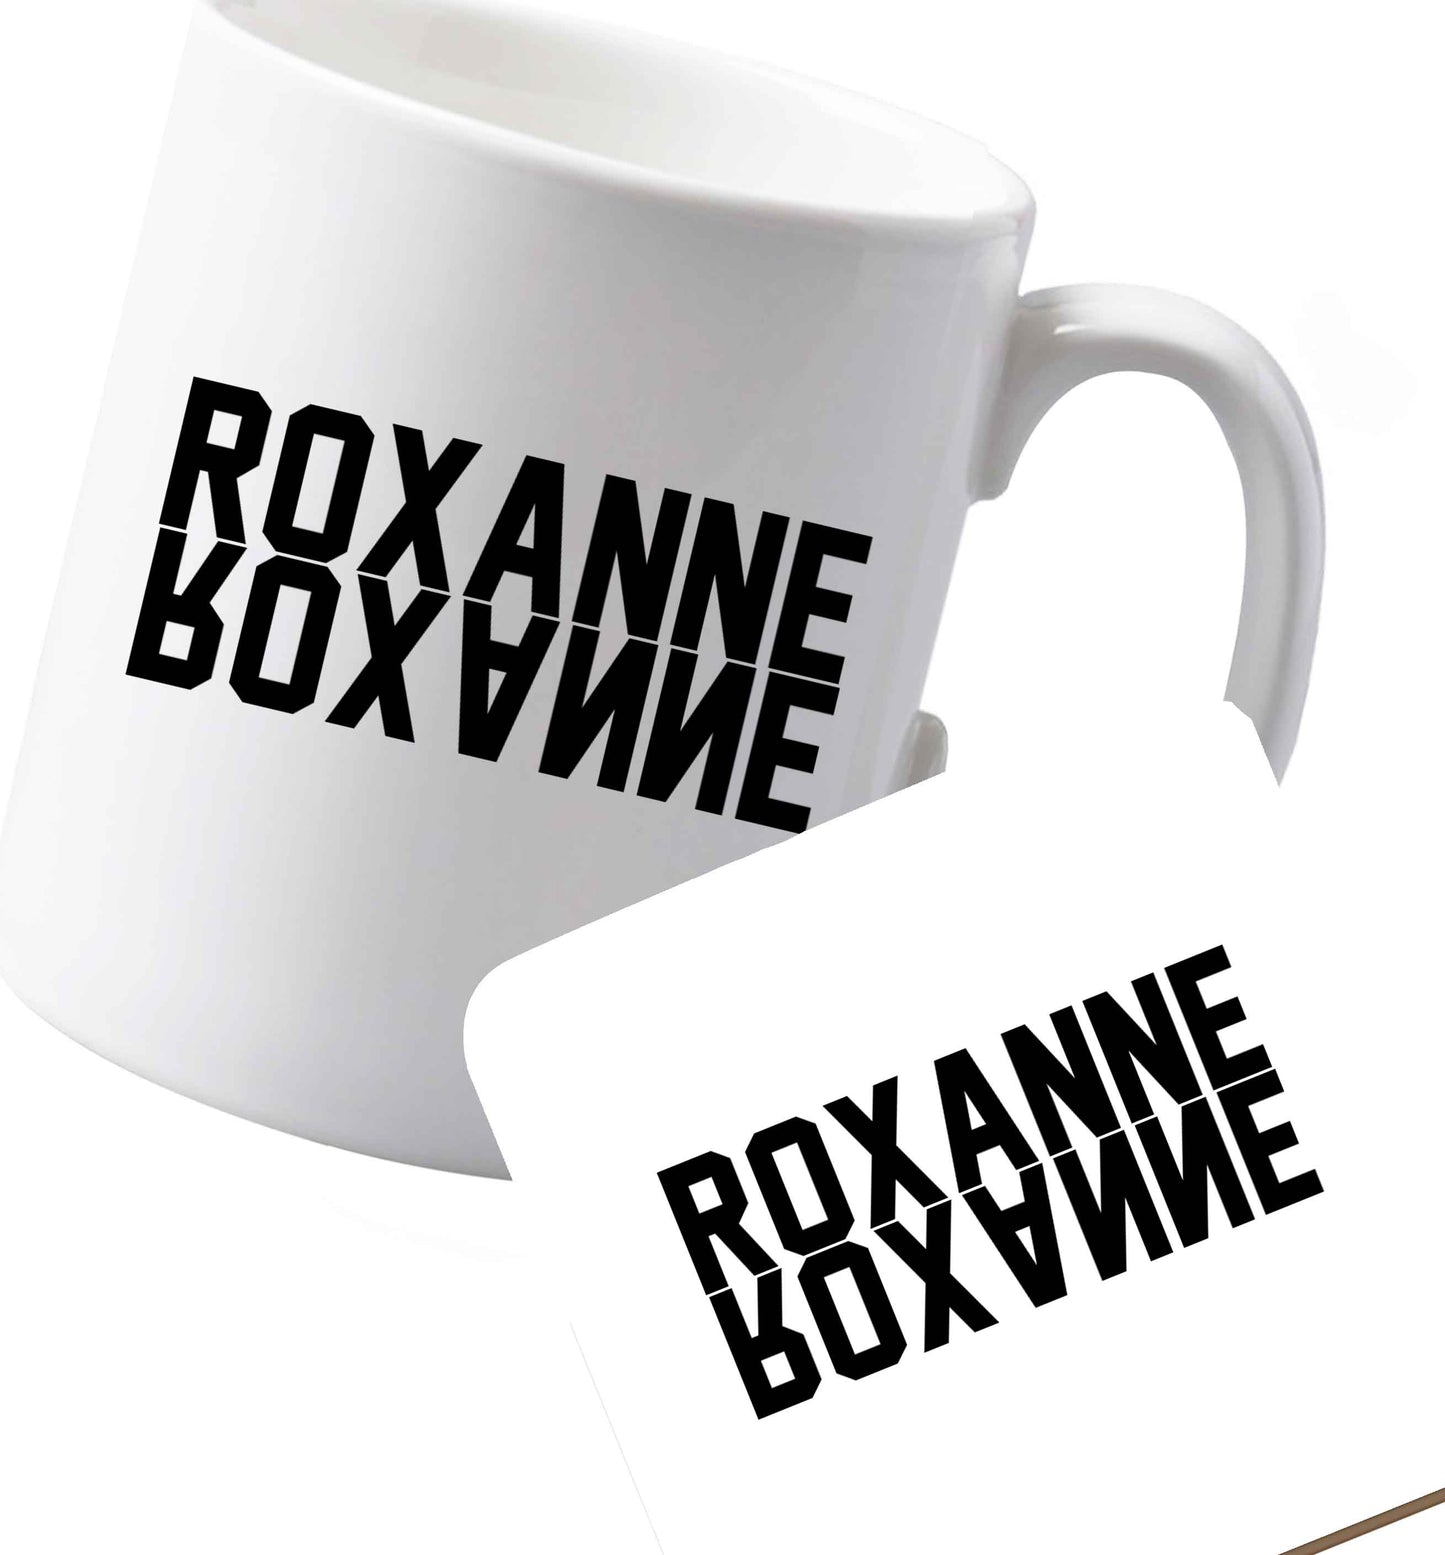 10 oz Ceramic mug and coaster Misheard song lyrics - check!    both sides